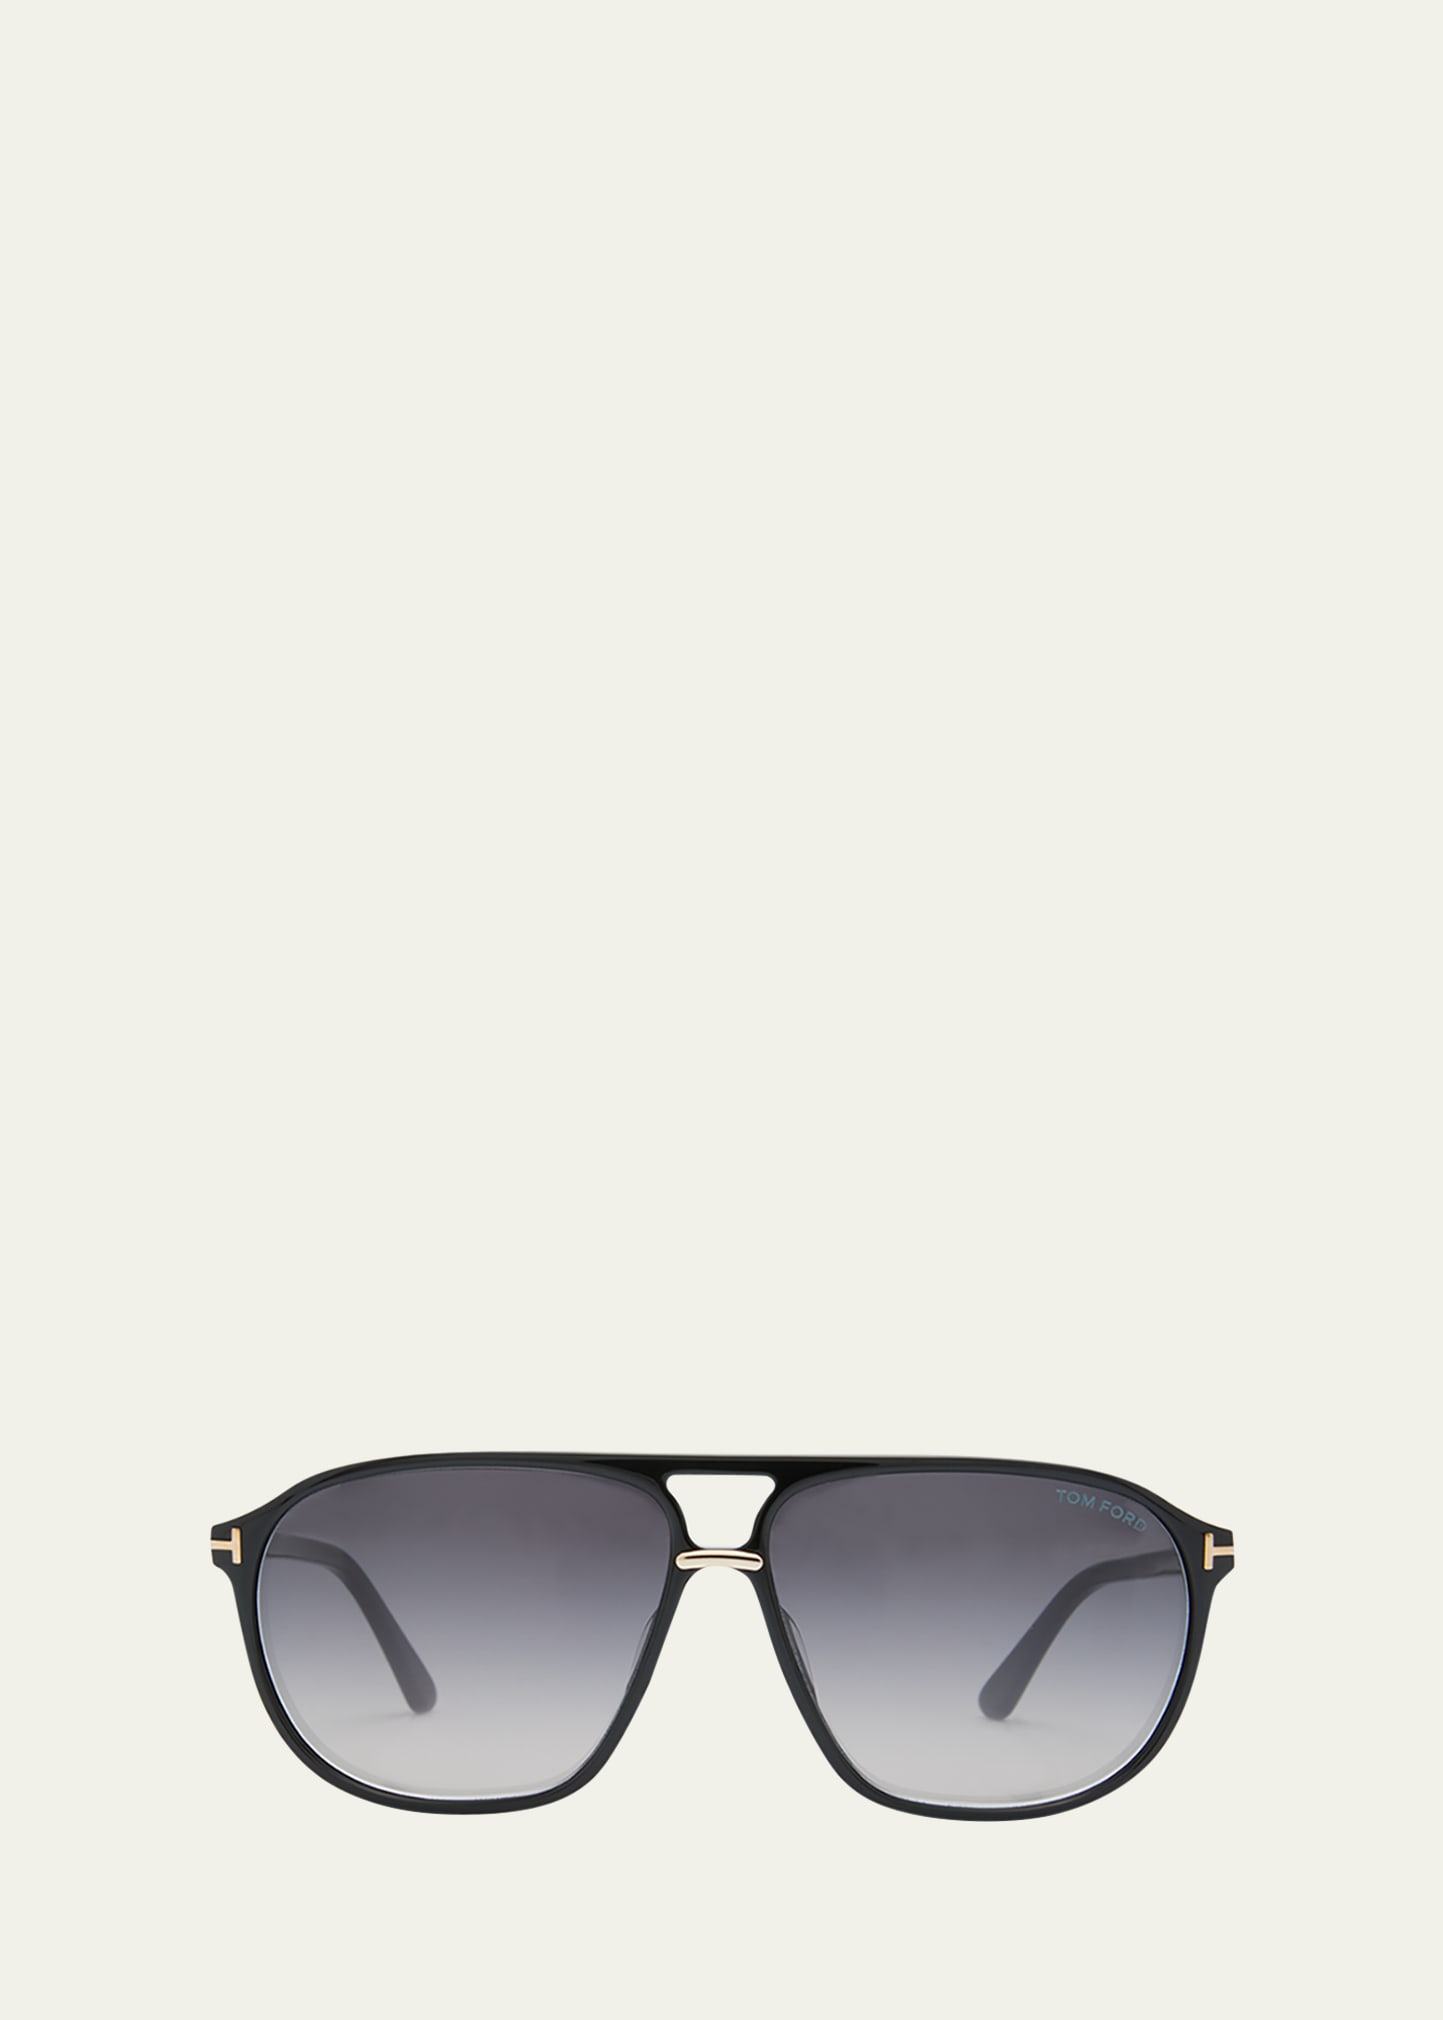 Tom Ford Men's Bruce Acetate Square Sunglasses In Black